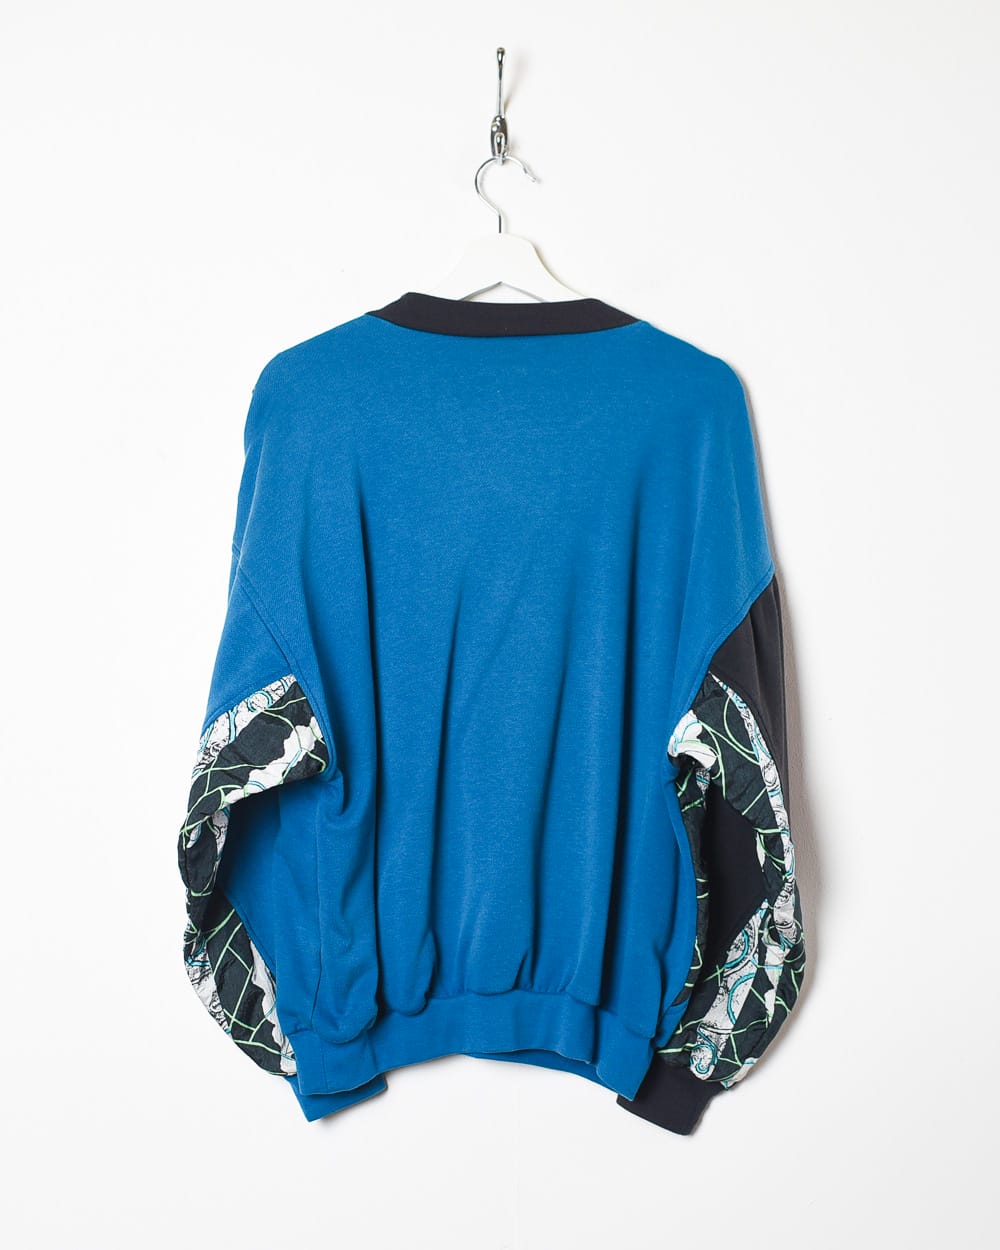 Blue Adidas Sweatshirt - Small